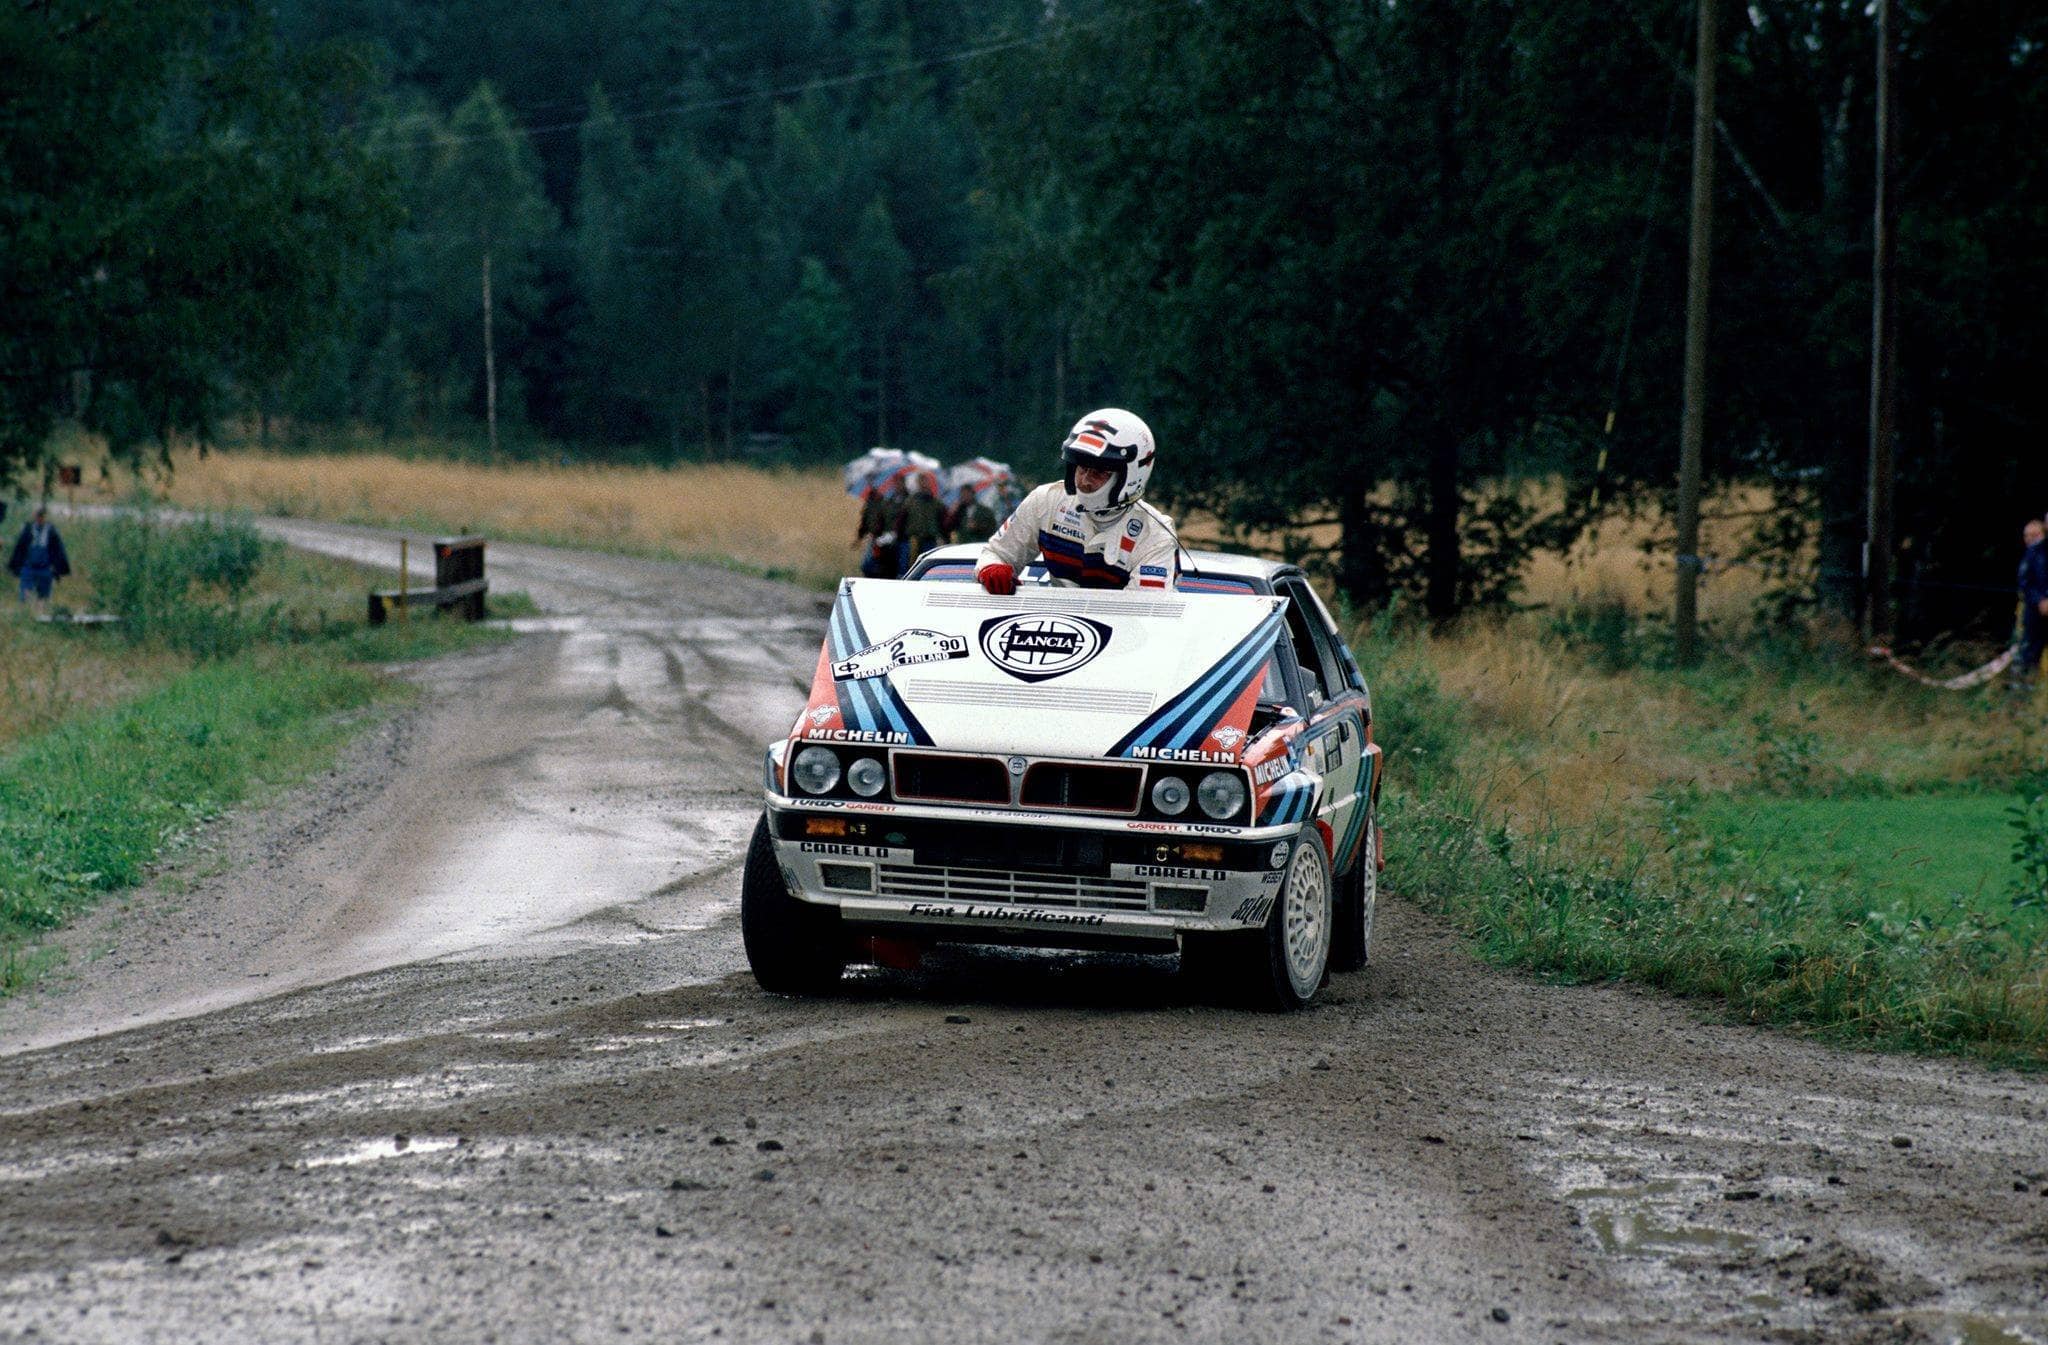 Juha Kankkunen / Juha Piironen, Lancia Delta Integrale 16V.
WRC, Rally 1000 Lakes (Finland), 1990